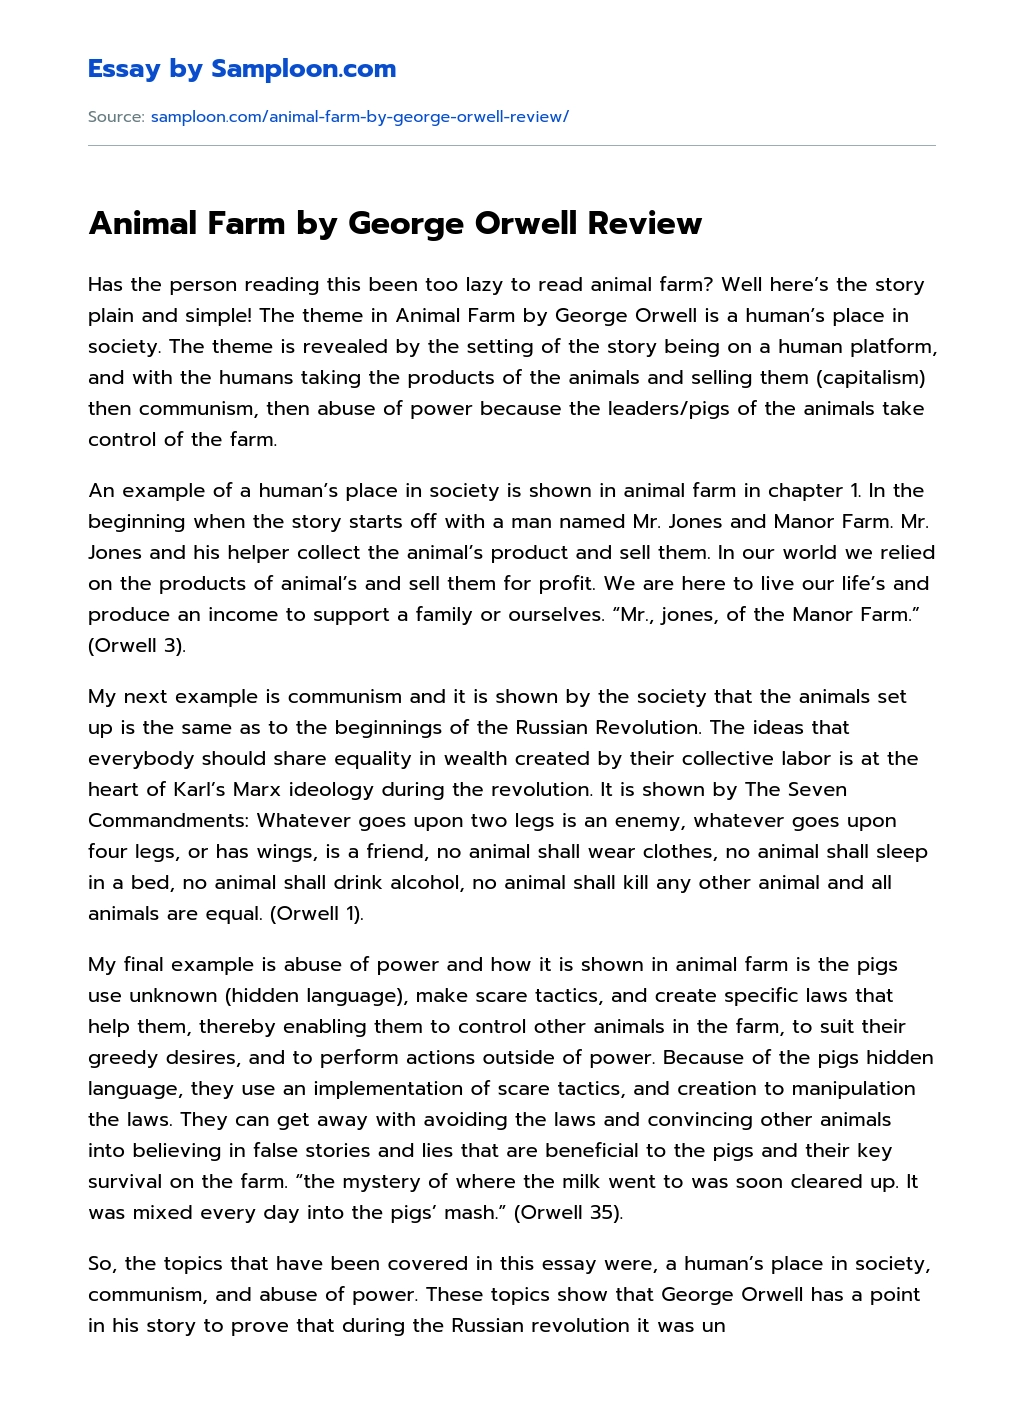 Animal Farm by George Orwell Review essay